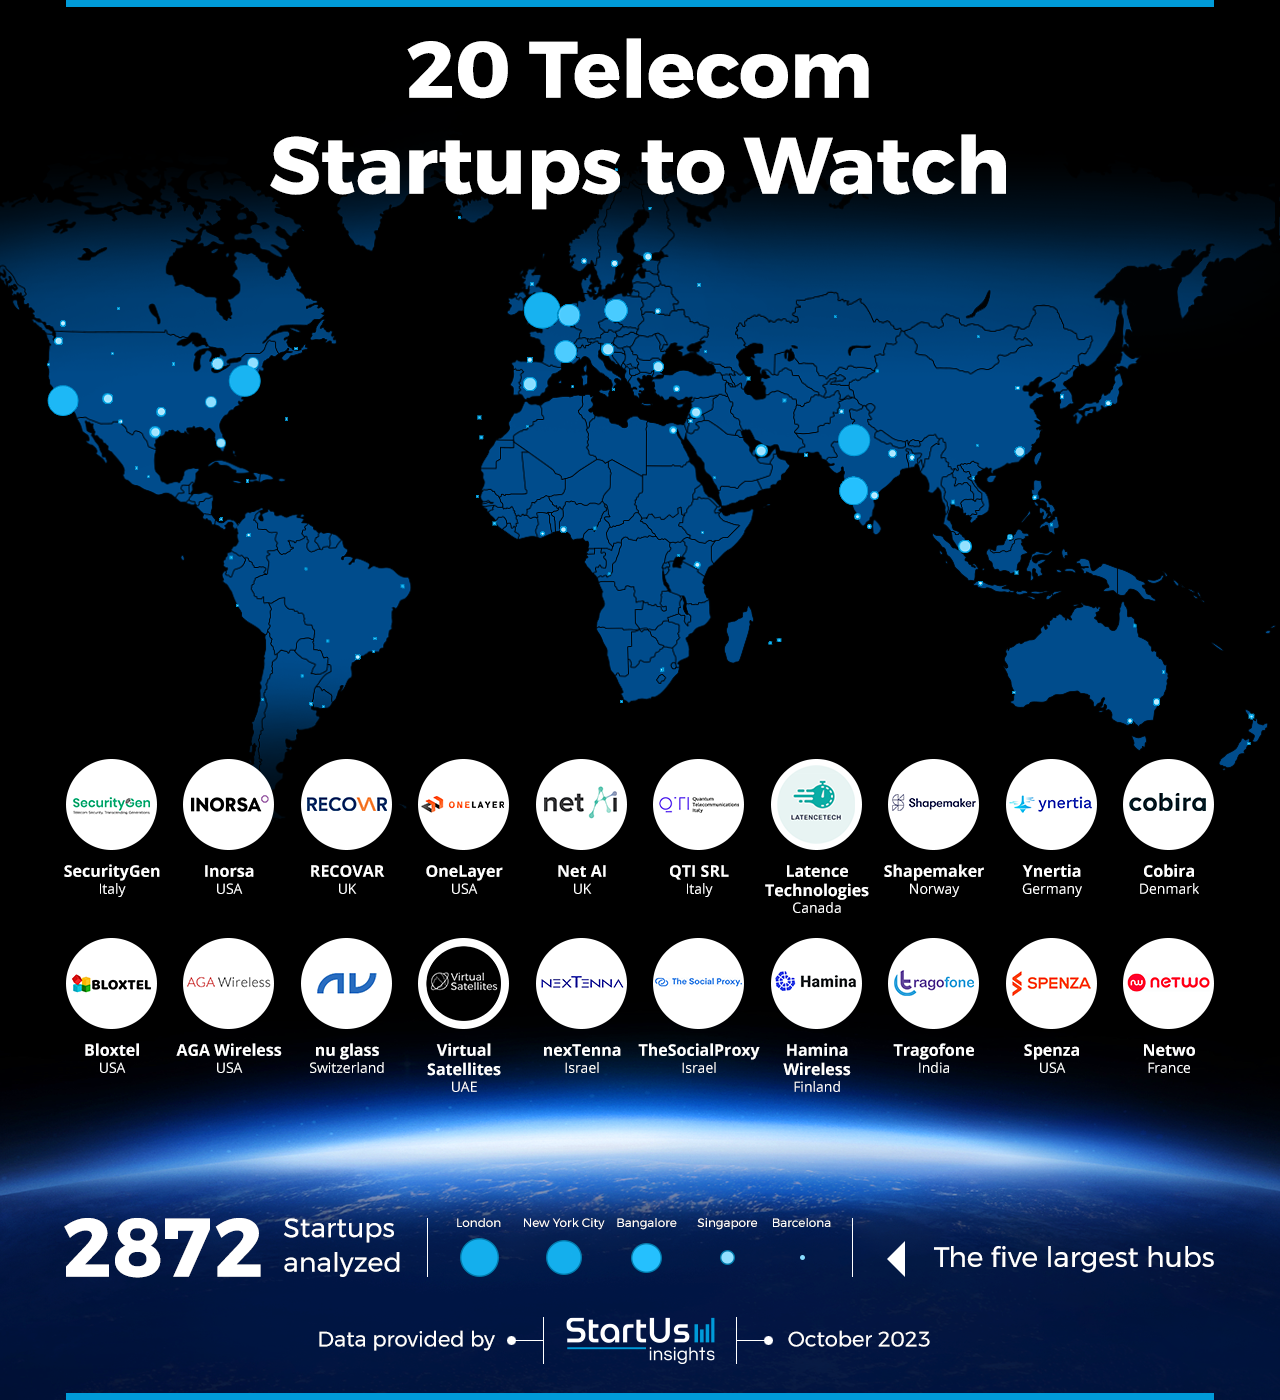 Telecom-Startups-to-Watch-Heat-Map-StartUs-Insights-noresize